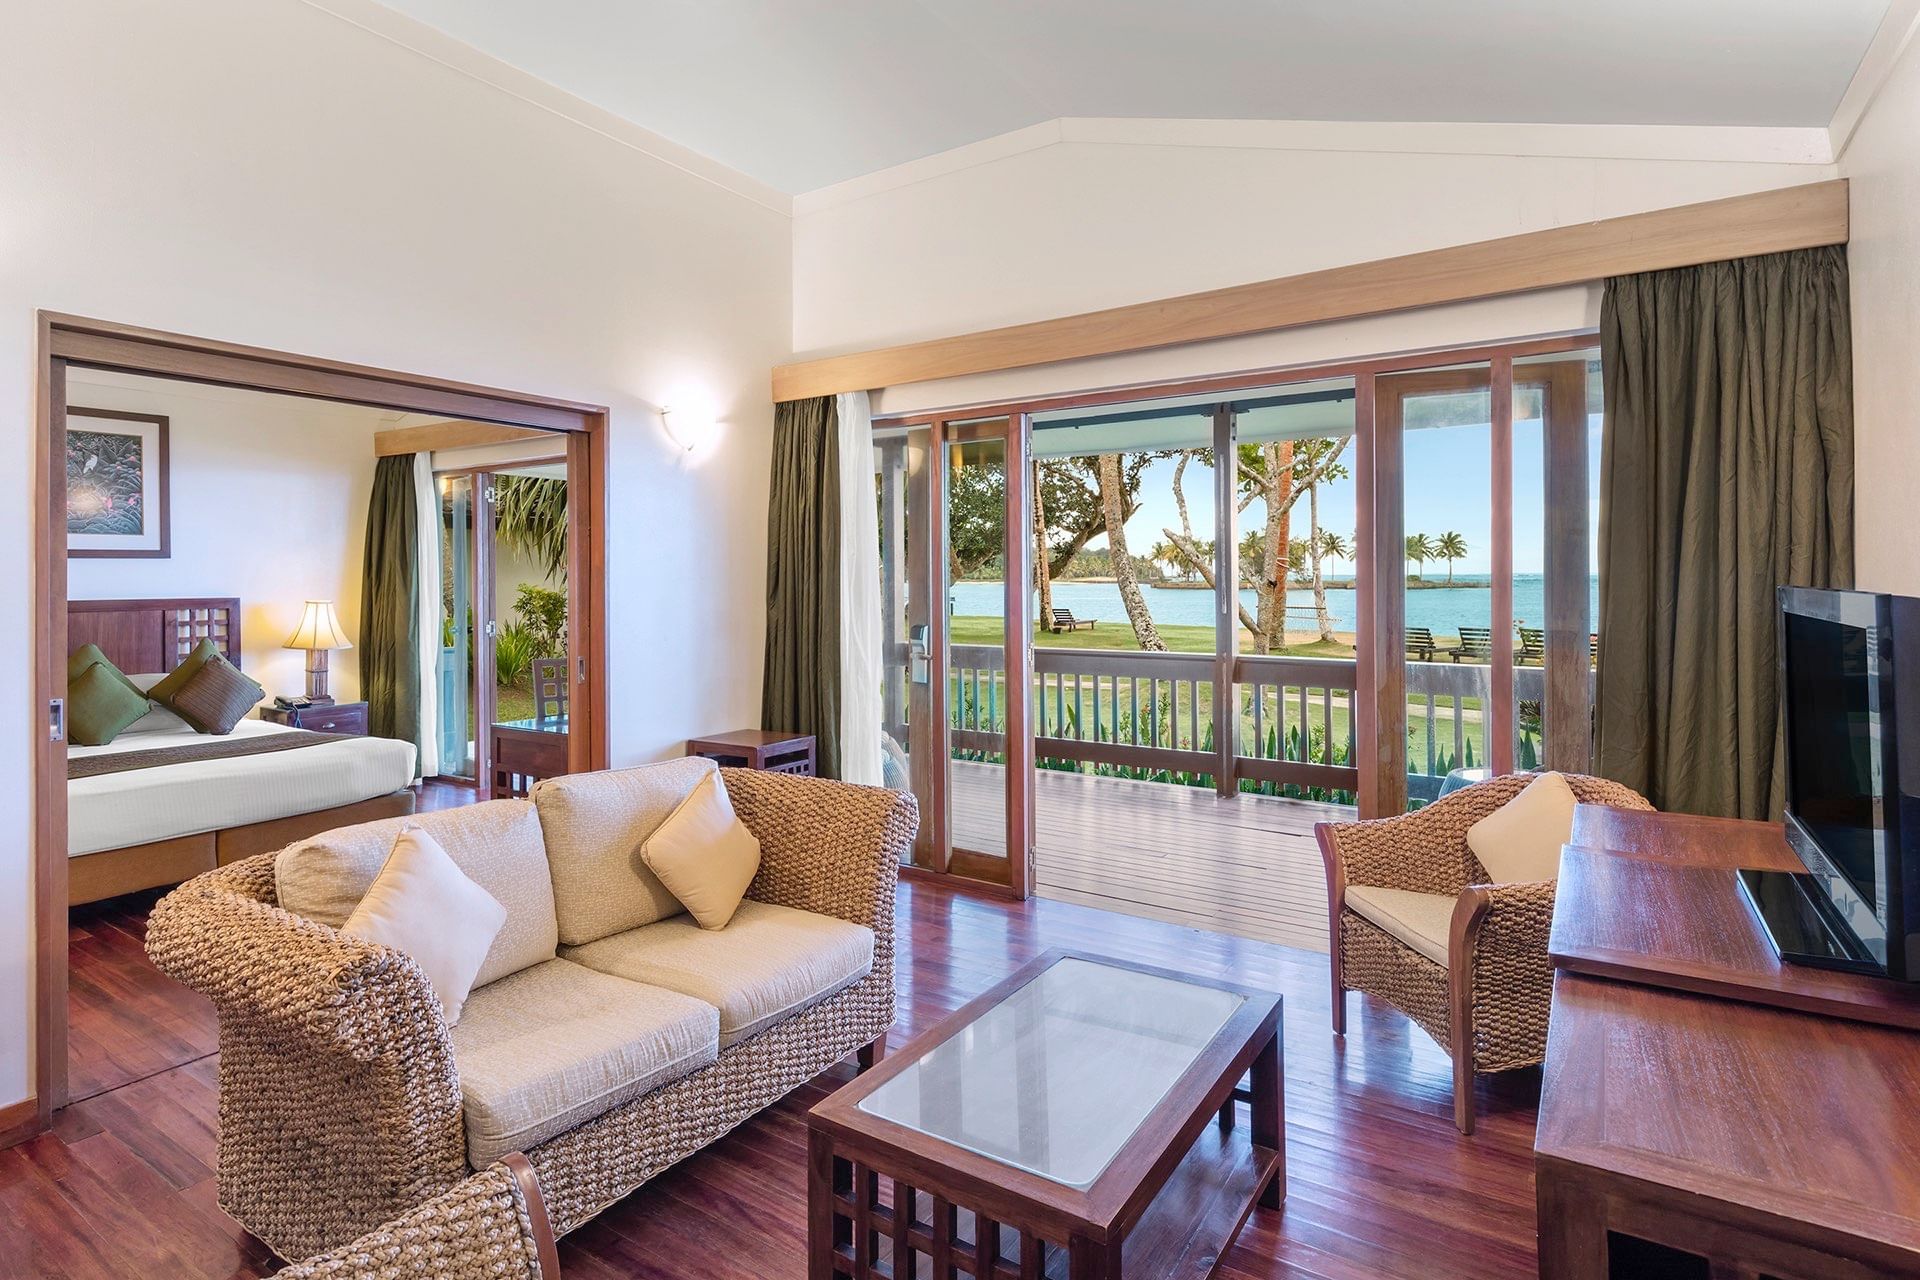 Bedroom & lounge area in One-Bedroom Villa at Naviti Resort